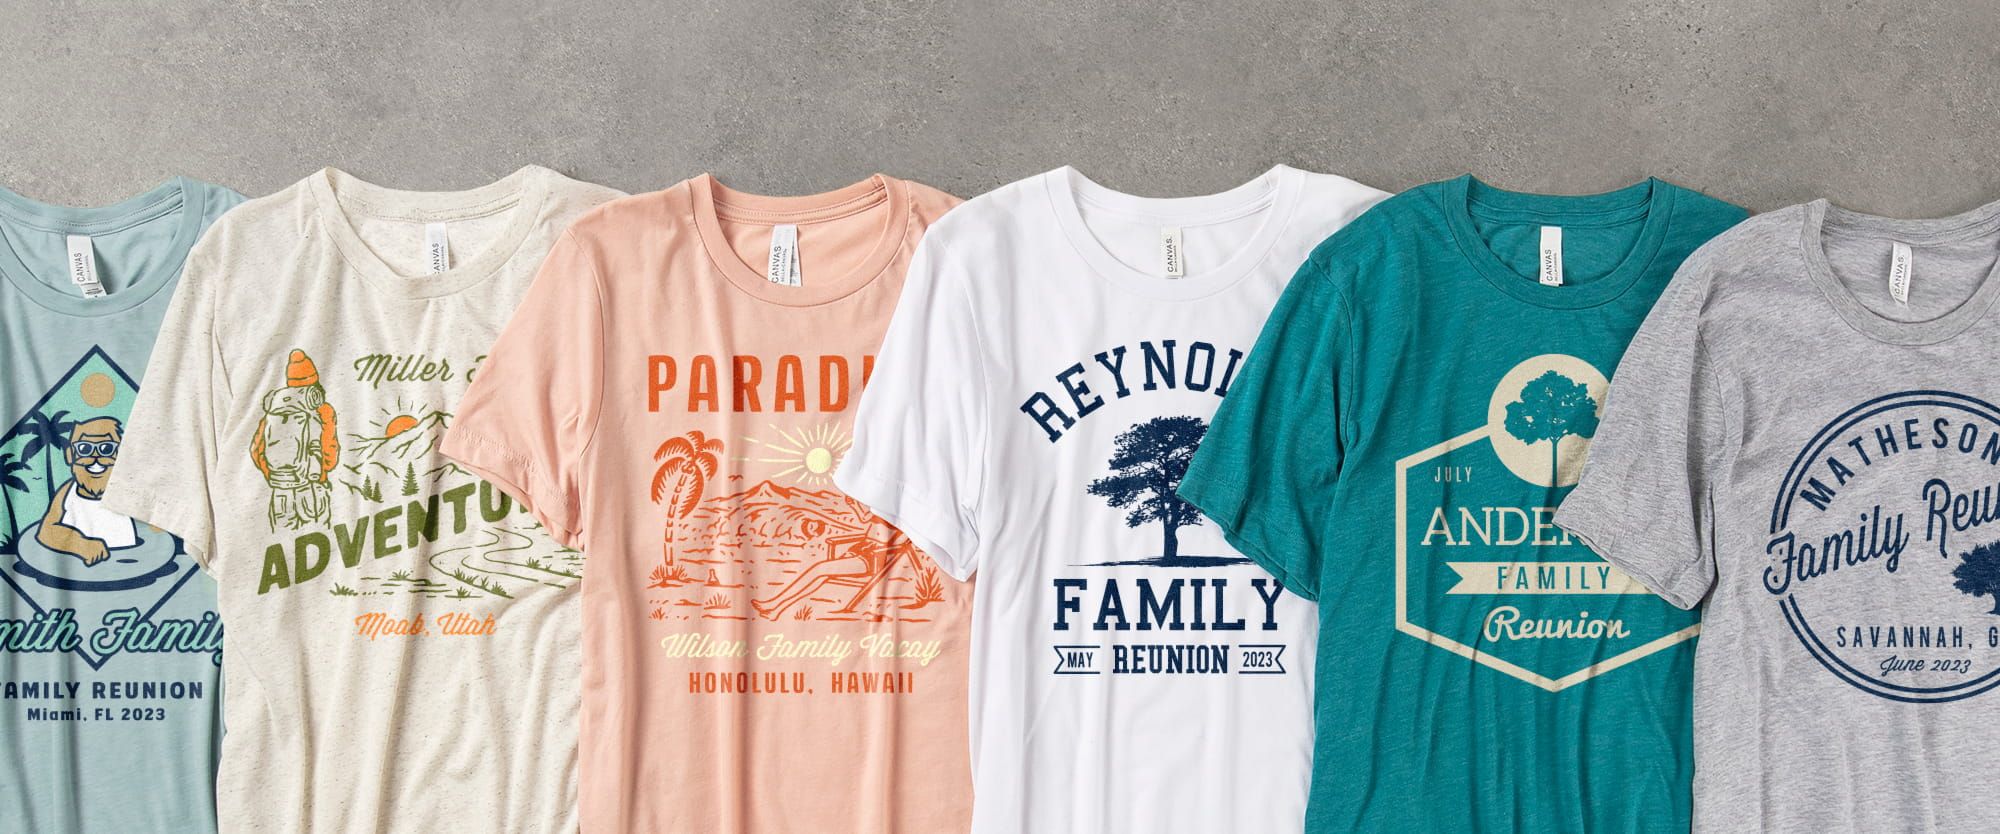 6 Ideas For Family Reunion T-Shirts | UberPrints